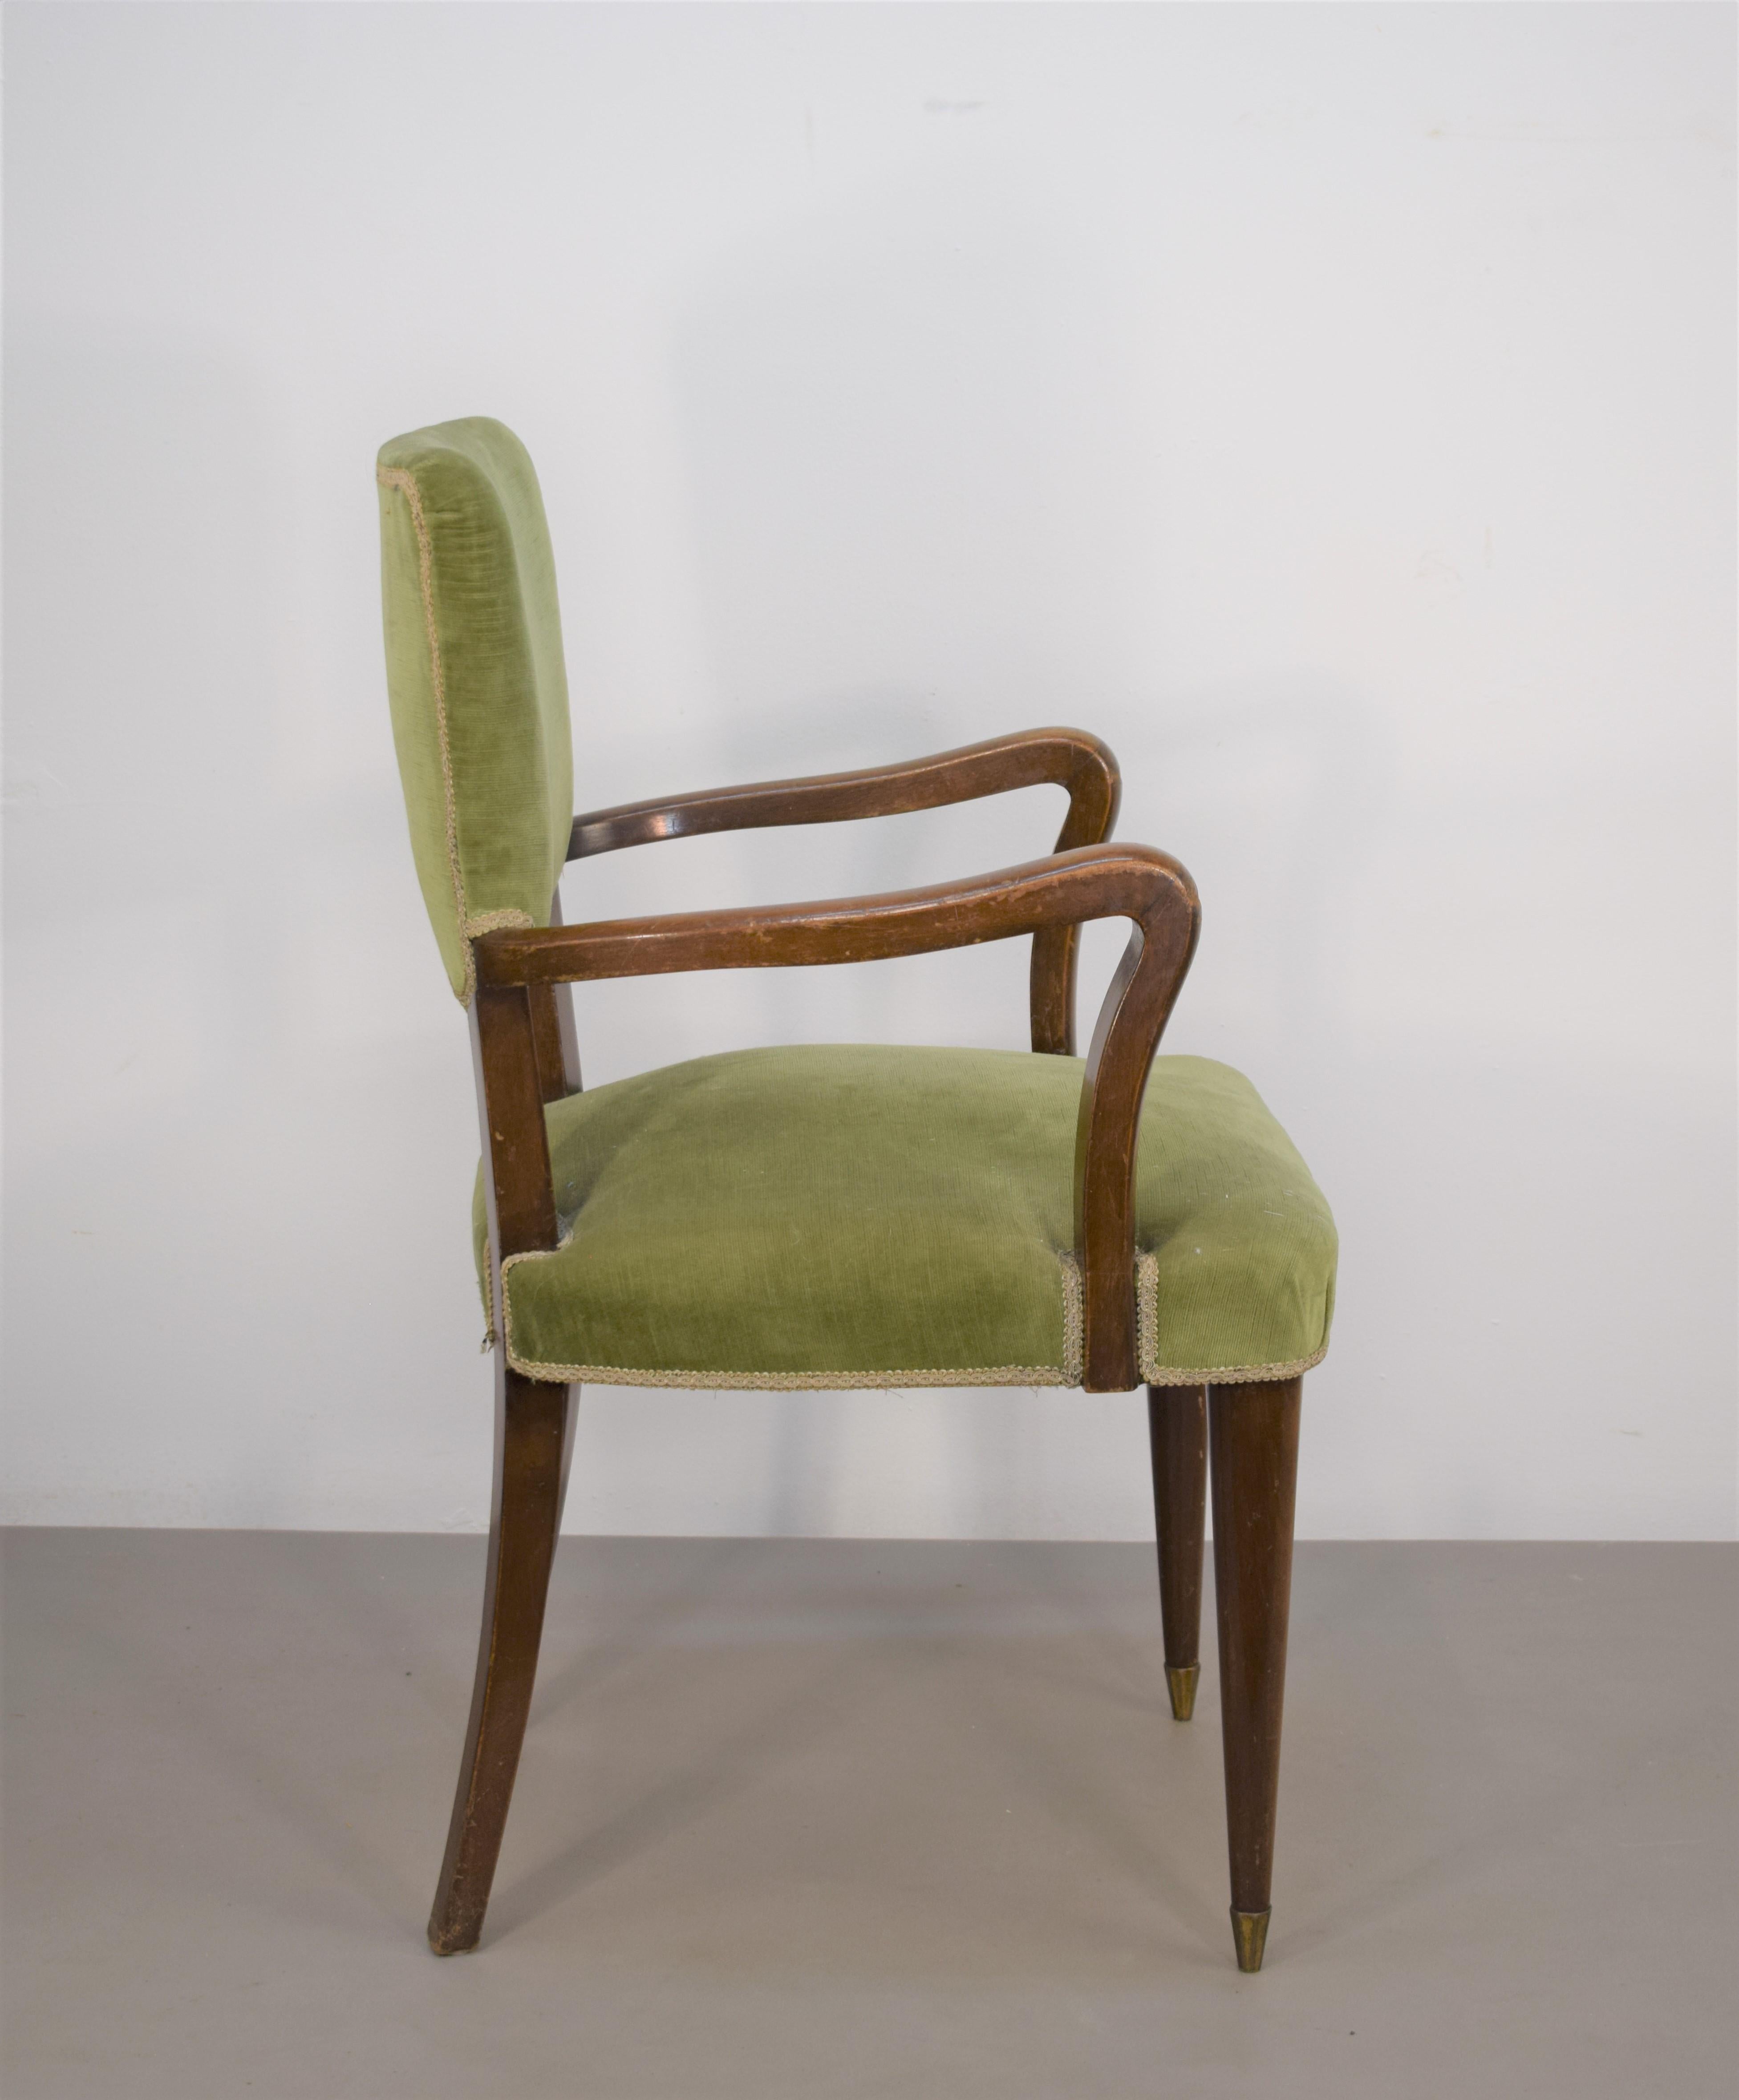 Italian armchair, 1950s.
Dimensions: H= 91 cm; W= 58 cm; D= 50 cm; H seat= 48 cm.